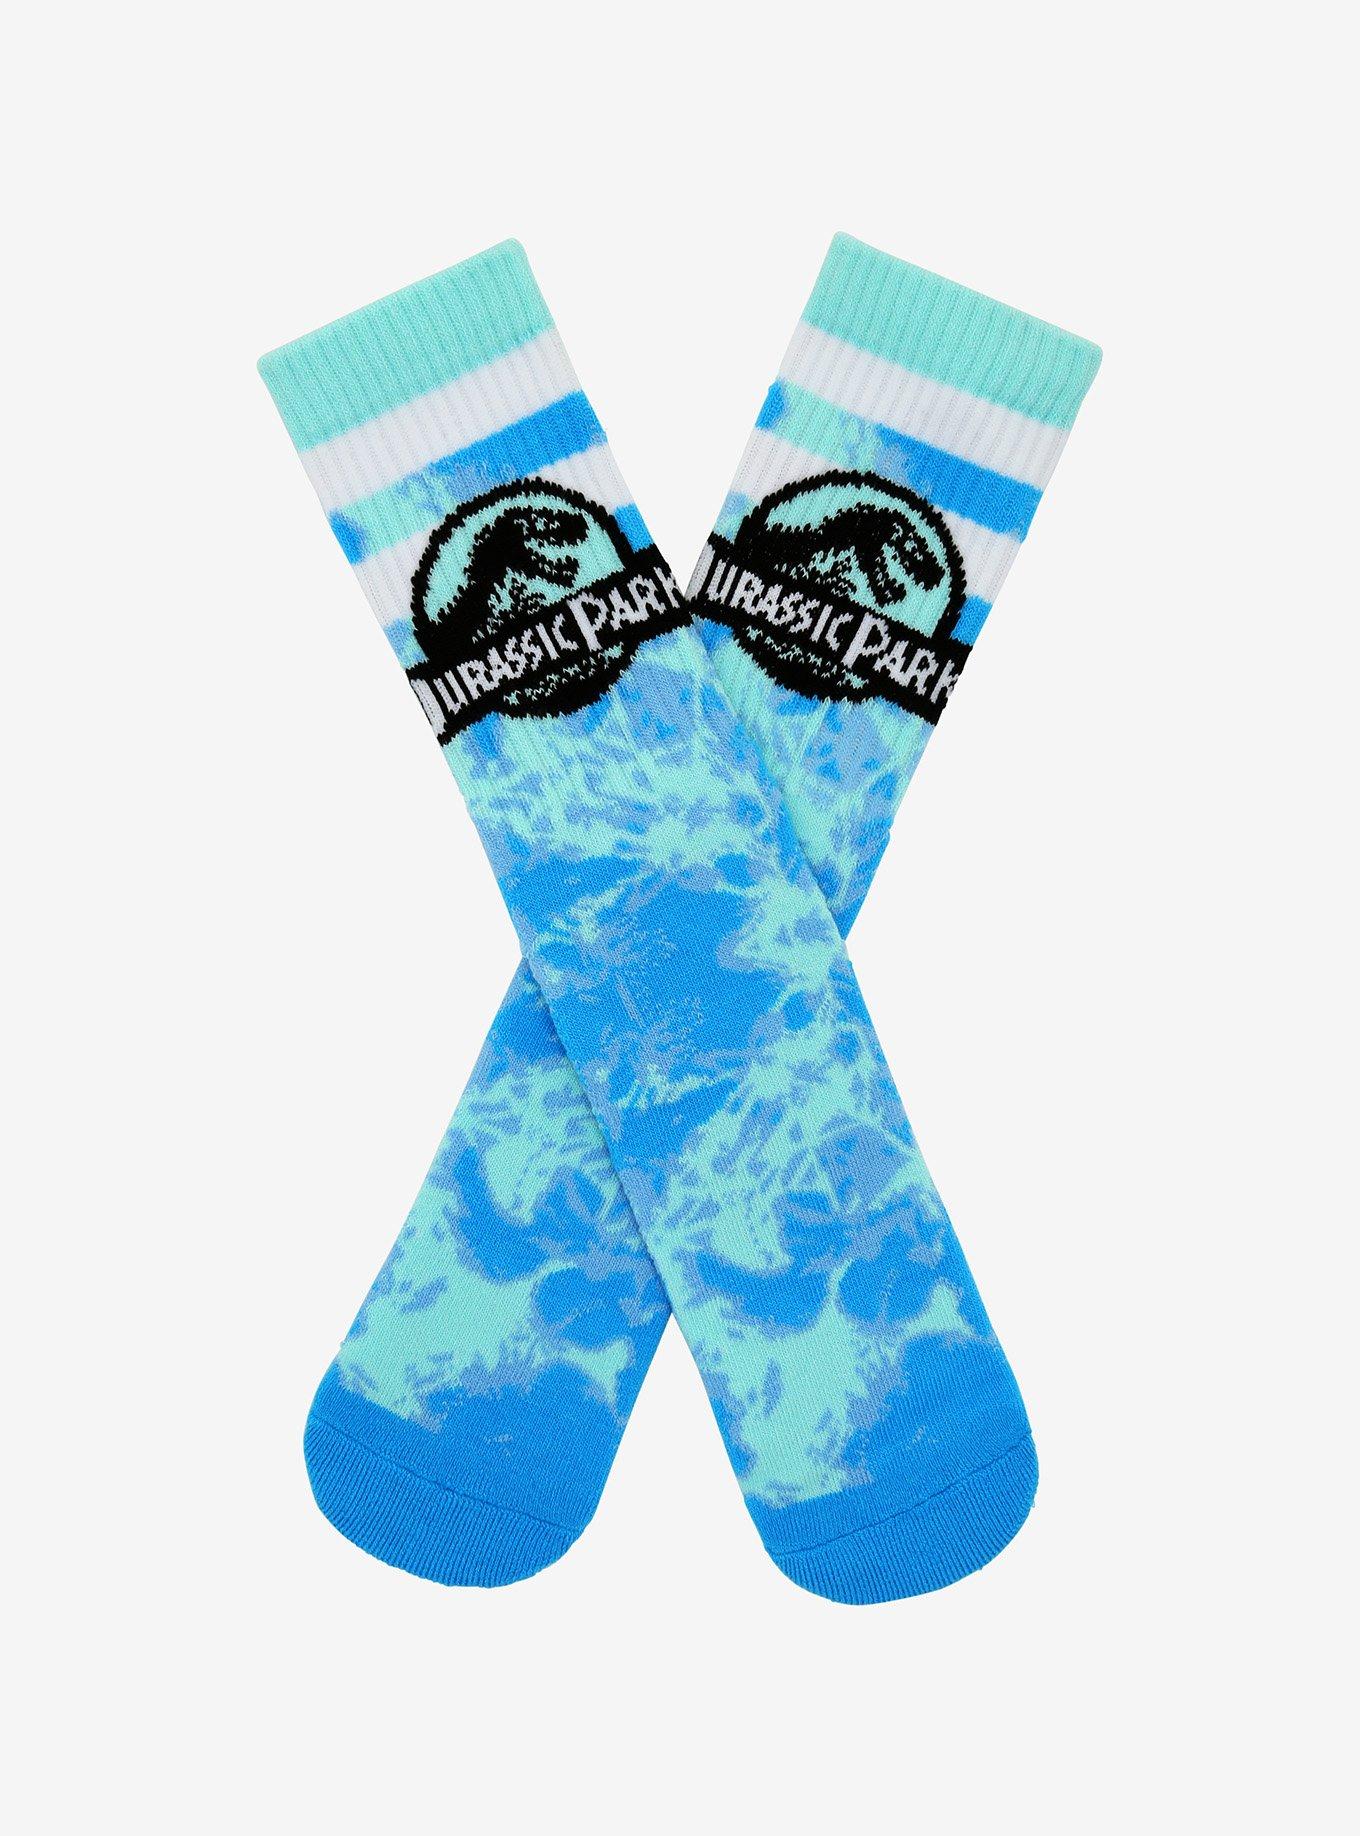 Jurassic Park Blue Tie-Dye Crew Socks, , hi-res